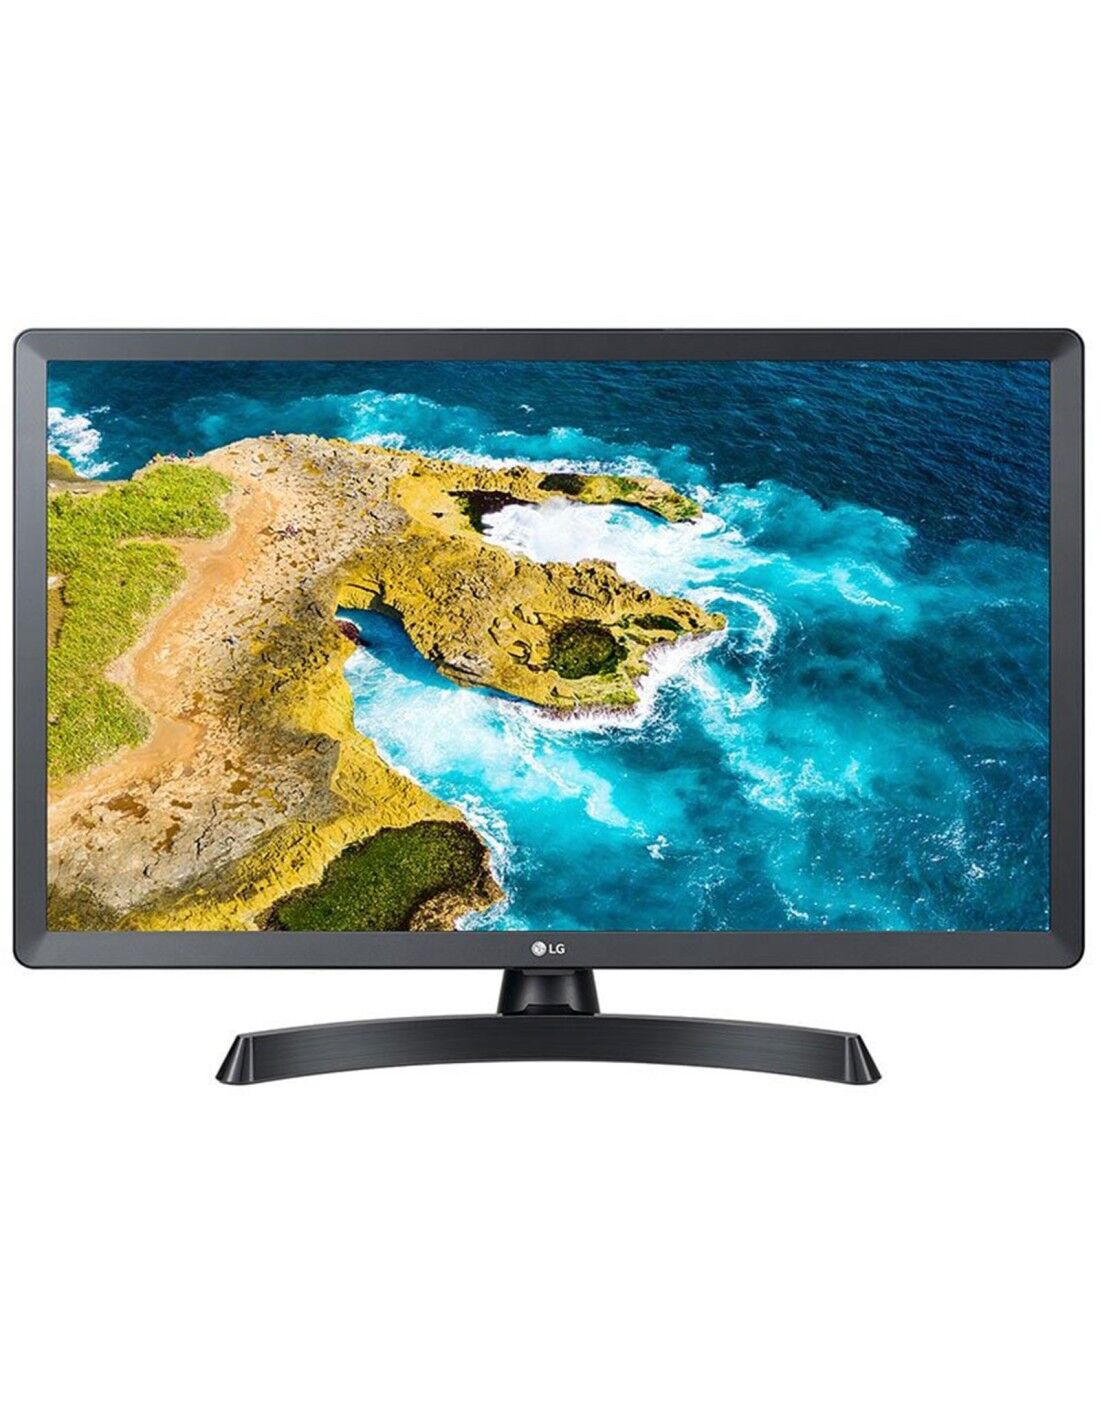 LG Monitor TV 28" LG 28TQ515S-PZ Led HD Ready 16:9 DVB-T2